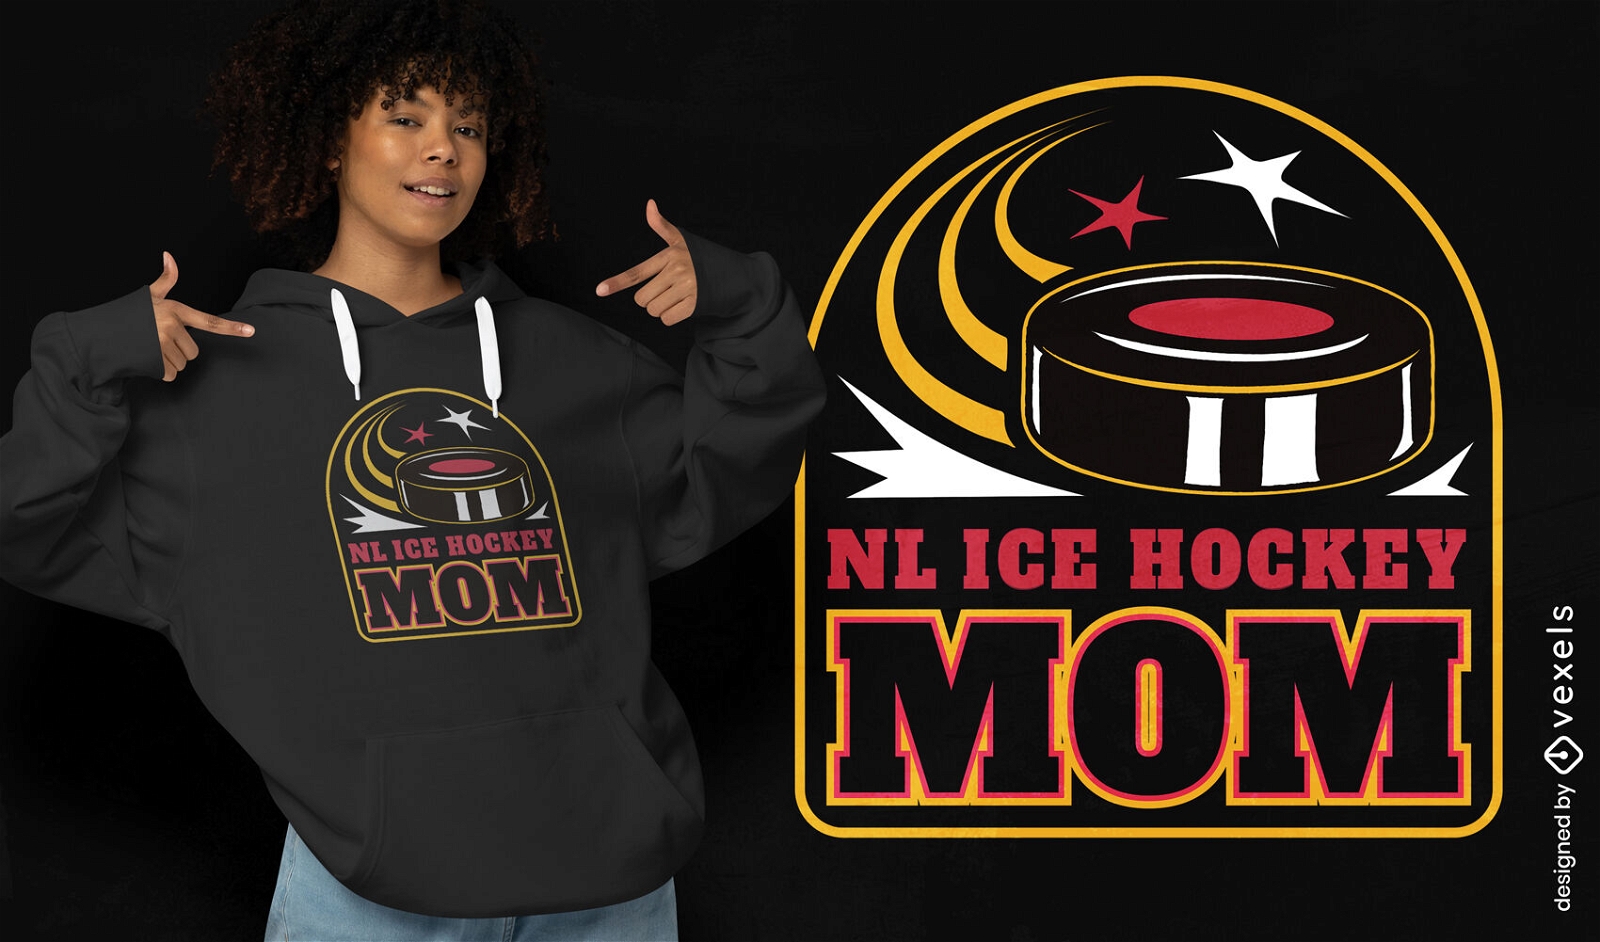 Nhl ice hockey mom t-shirt design